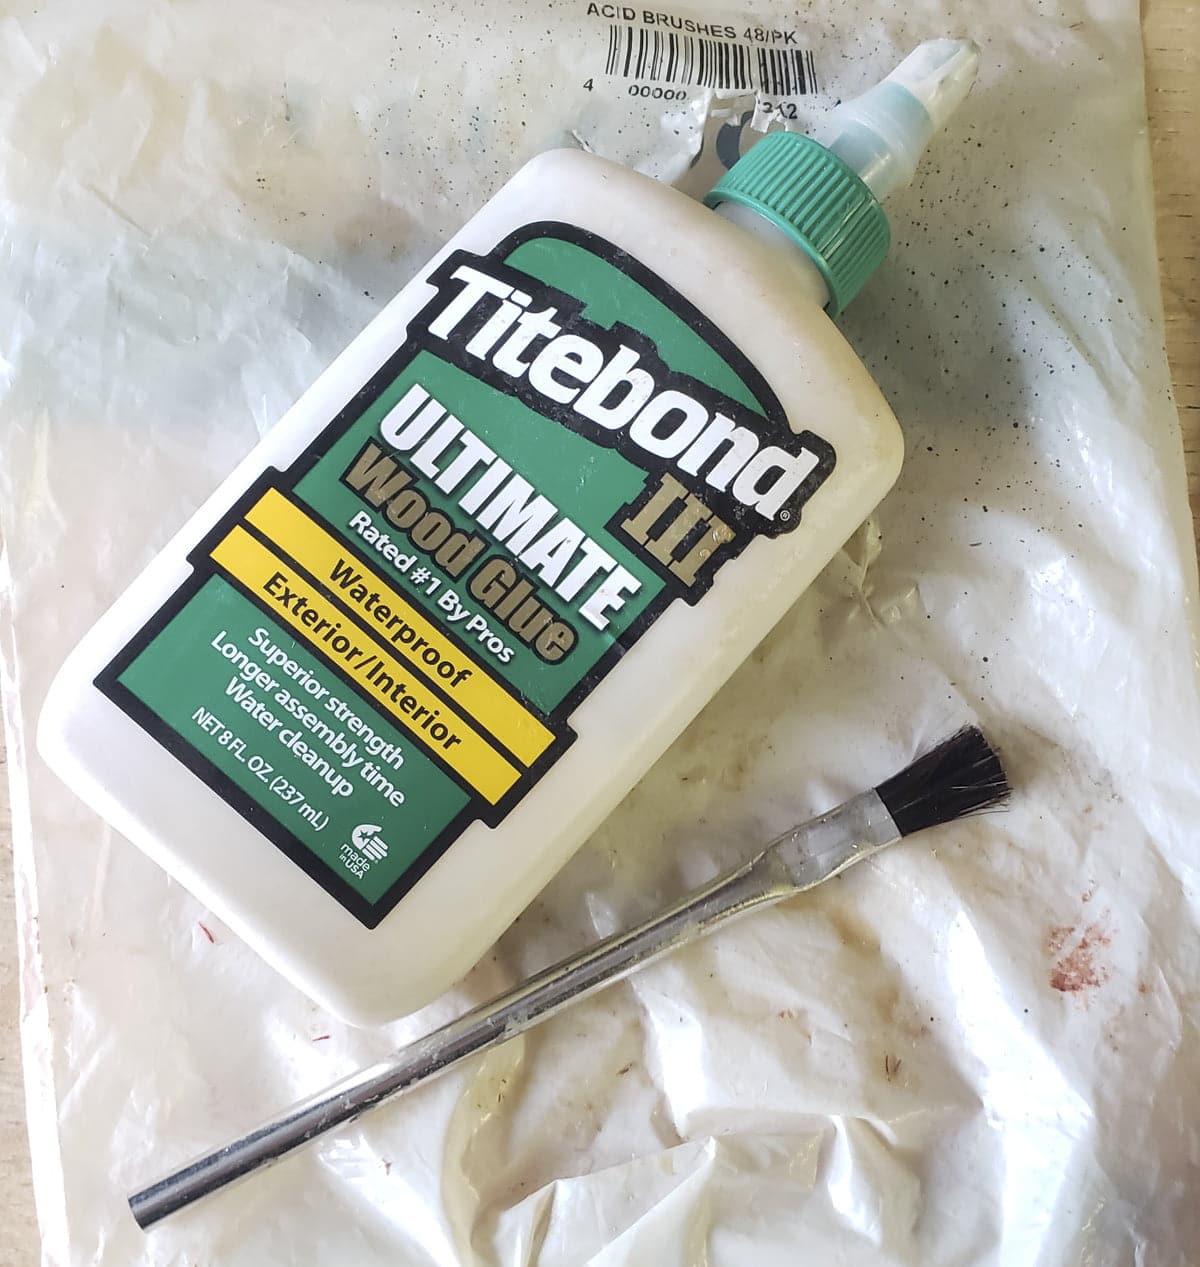 A bottle of Titebond III Glue and a glue brush